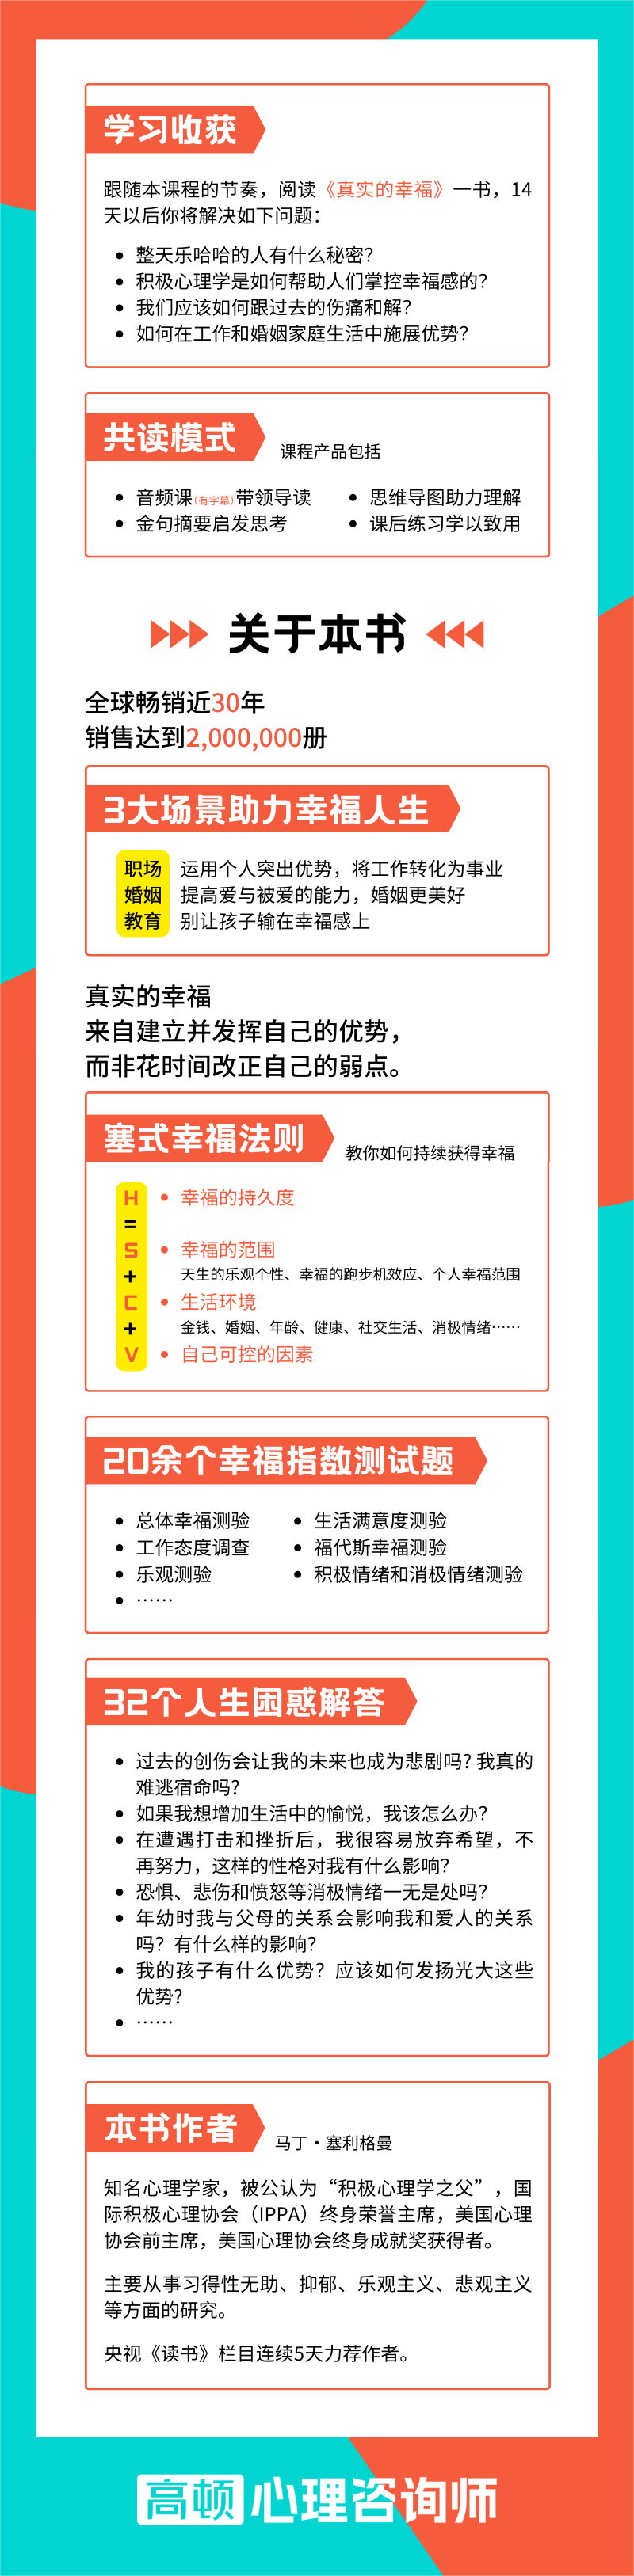 https://simg01.gaodunwangxiao.com/uploadfiles/product-center/202212/27/a9598_20221227155022.png